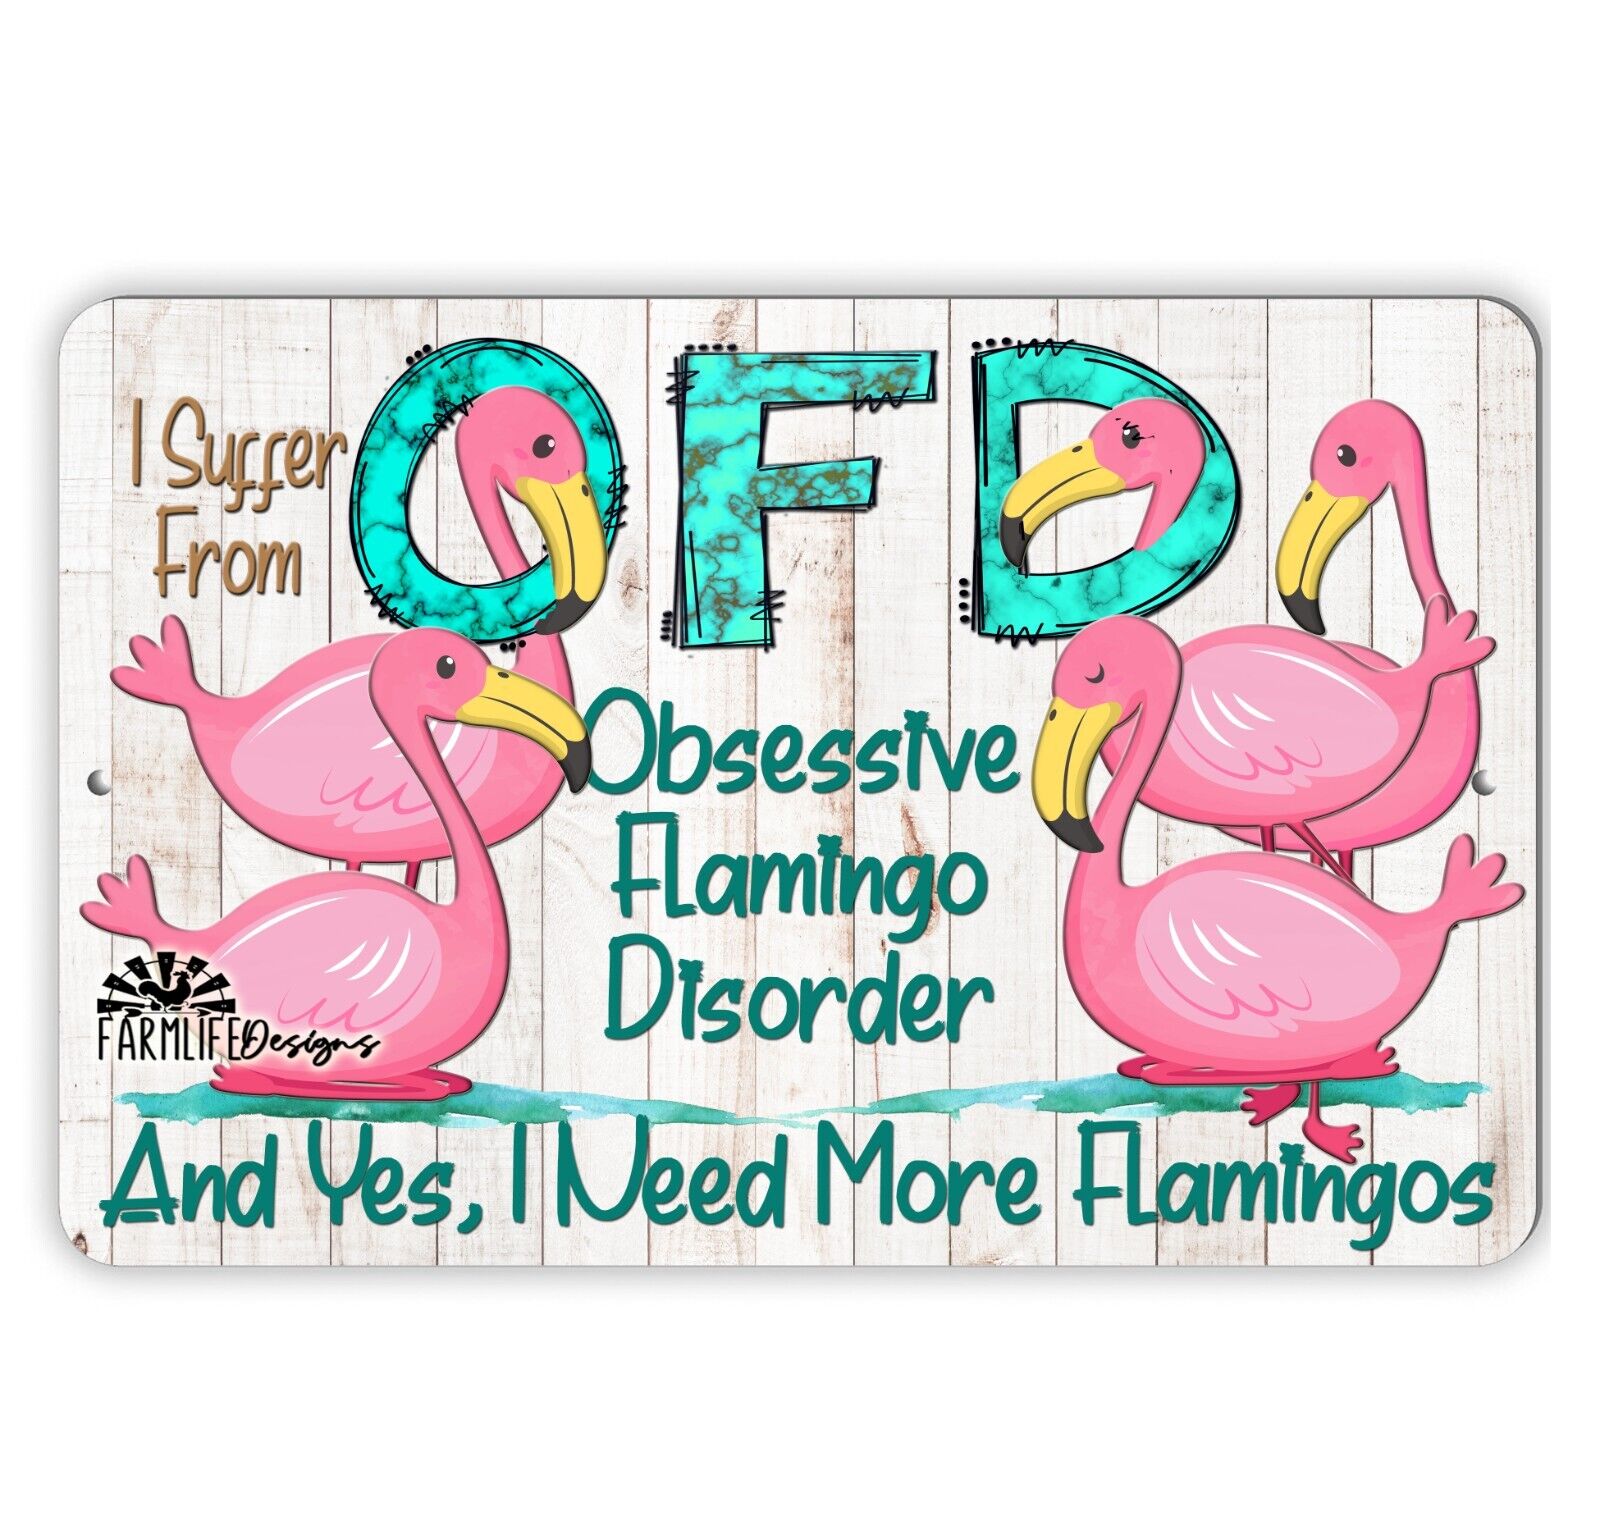 Funny Flamingo Sign - OFD Obsessive Flamingo Disorder - 8x12 handmade aluminum